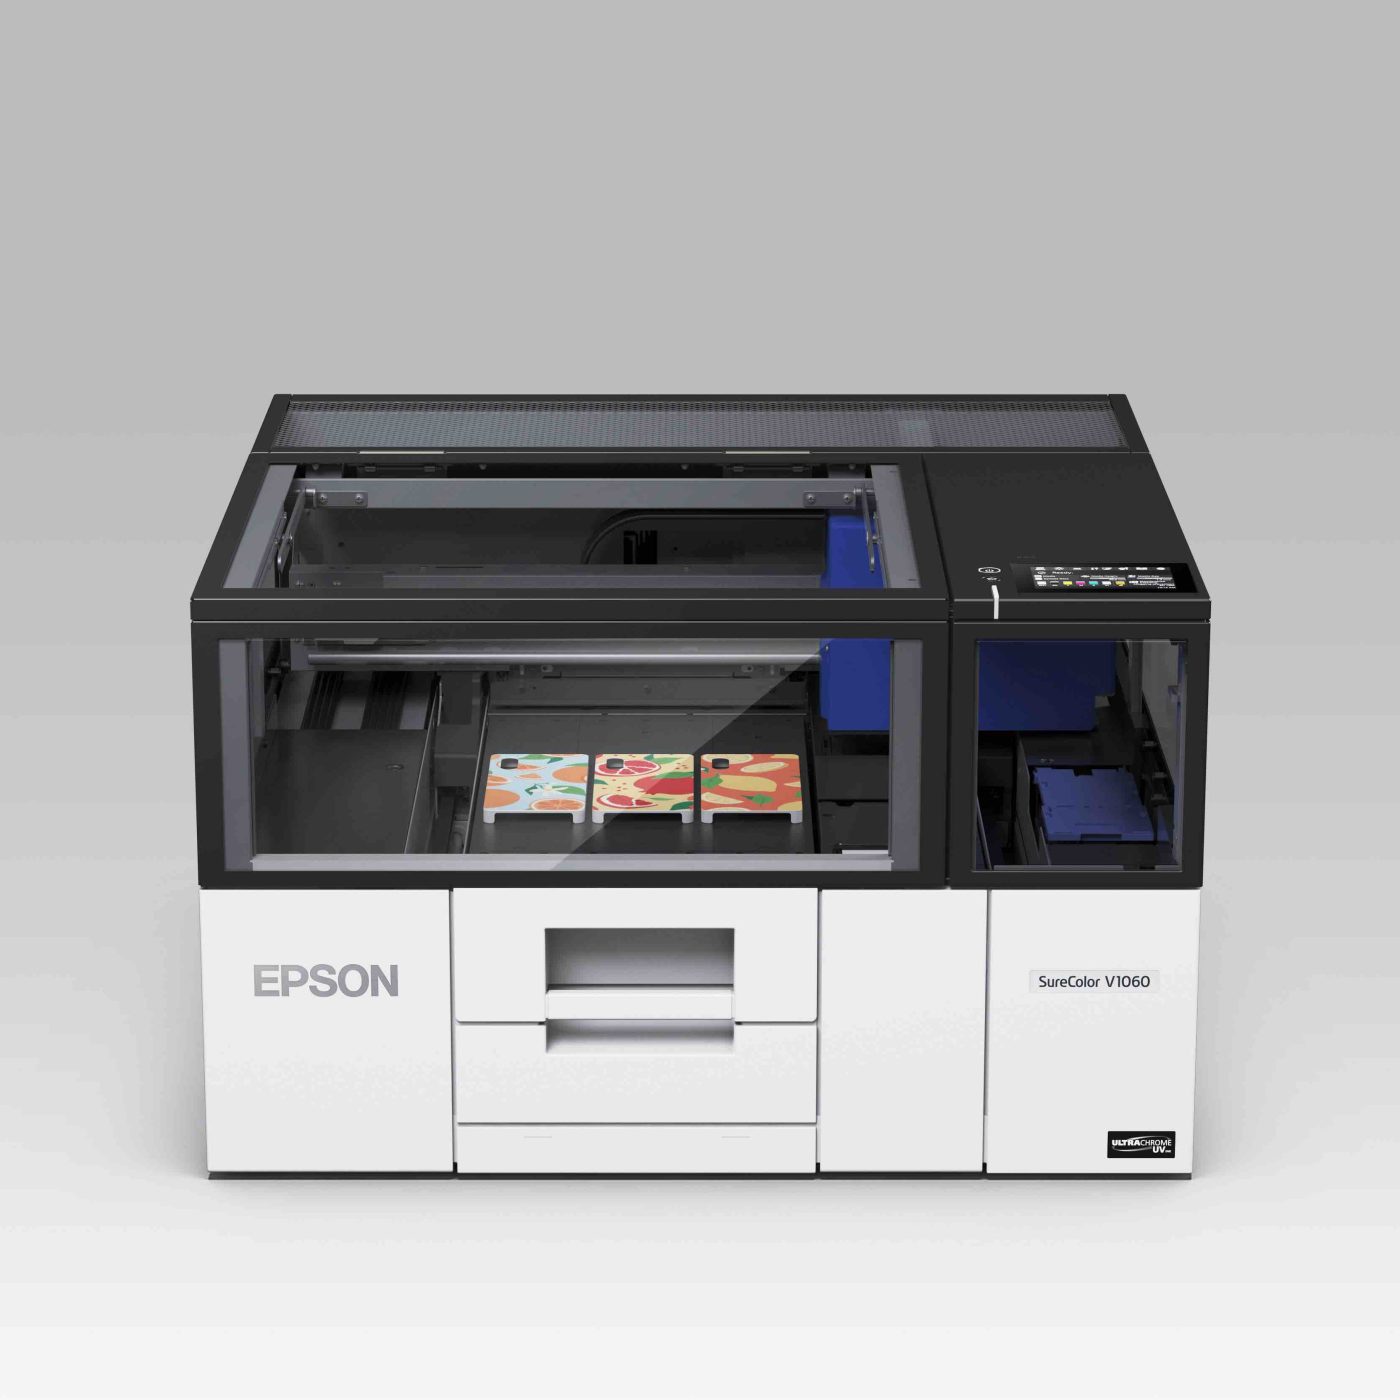 Epson SureColor V1060 compact desktop UV printer